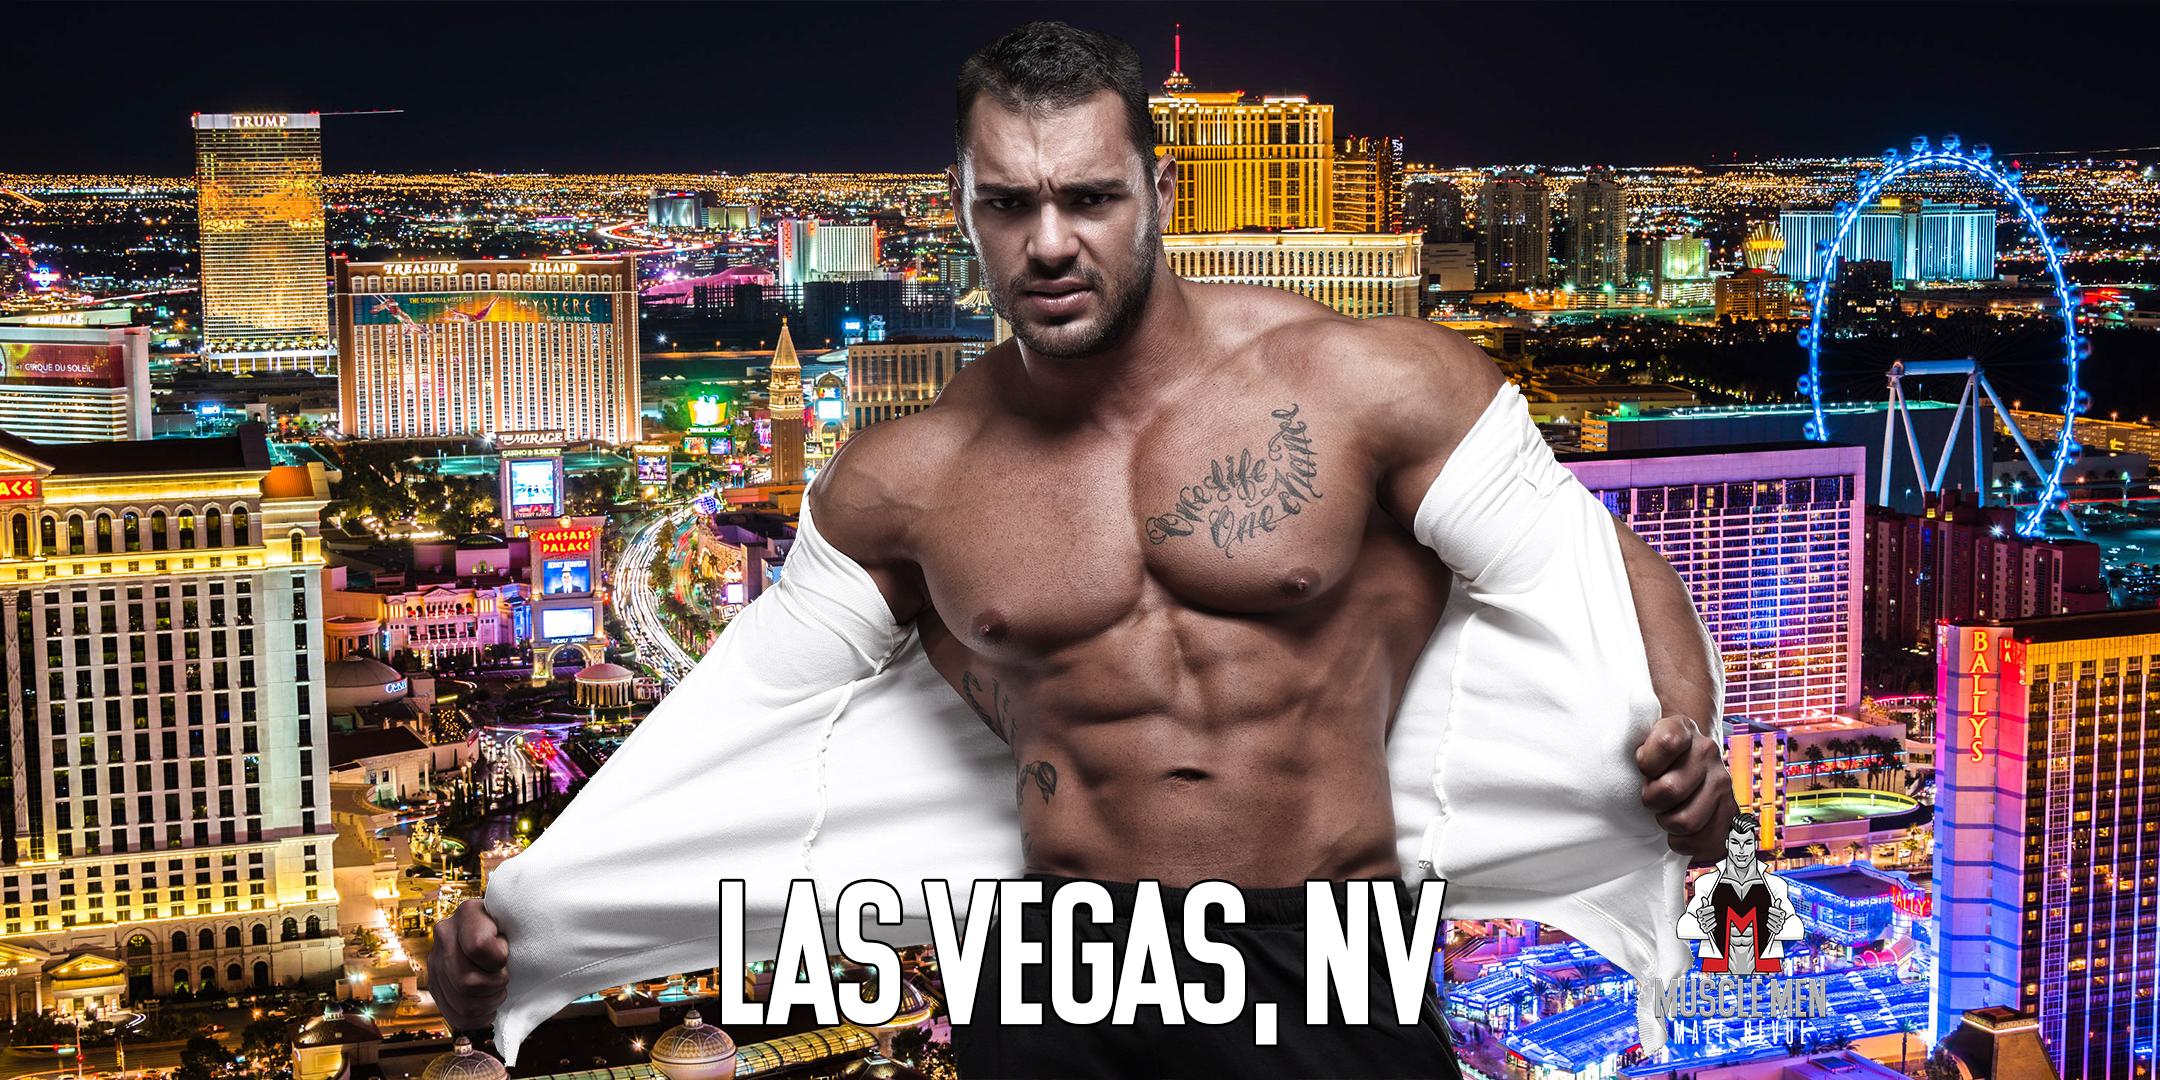 Muscle Men Male Strippers Revue Male Strip Club Shows Las Vegas Nv